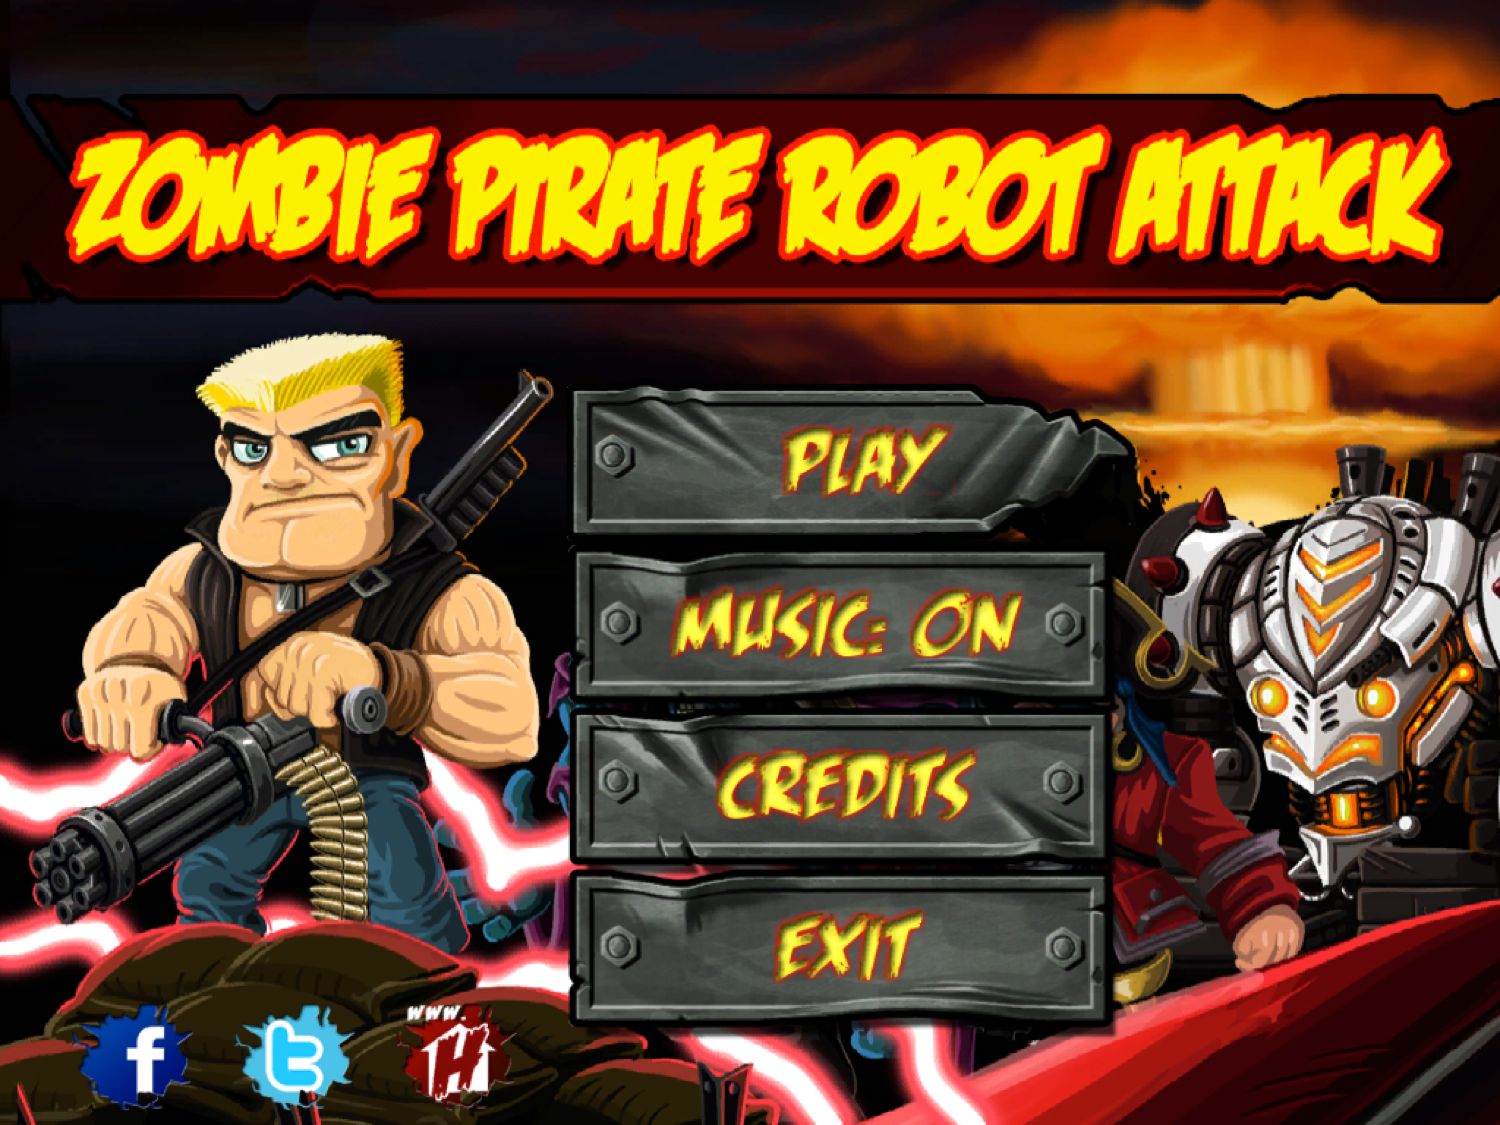 Zombie Pirate Robot Attack 1.0 : Main Menu